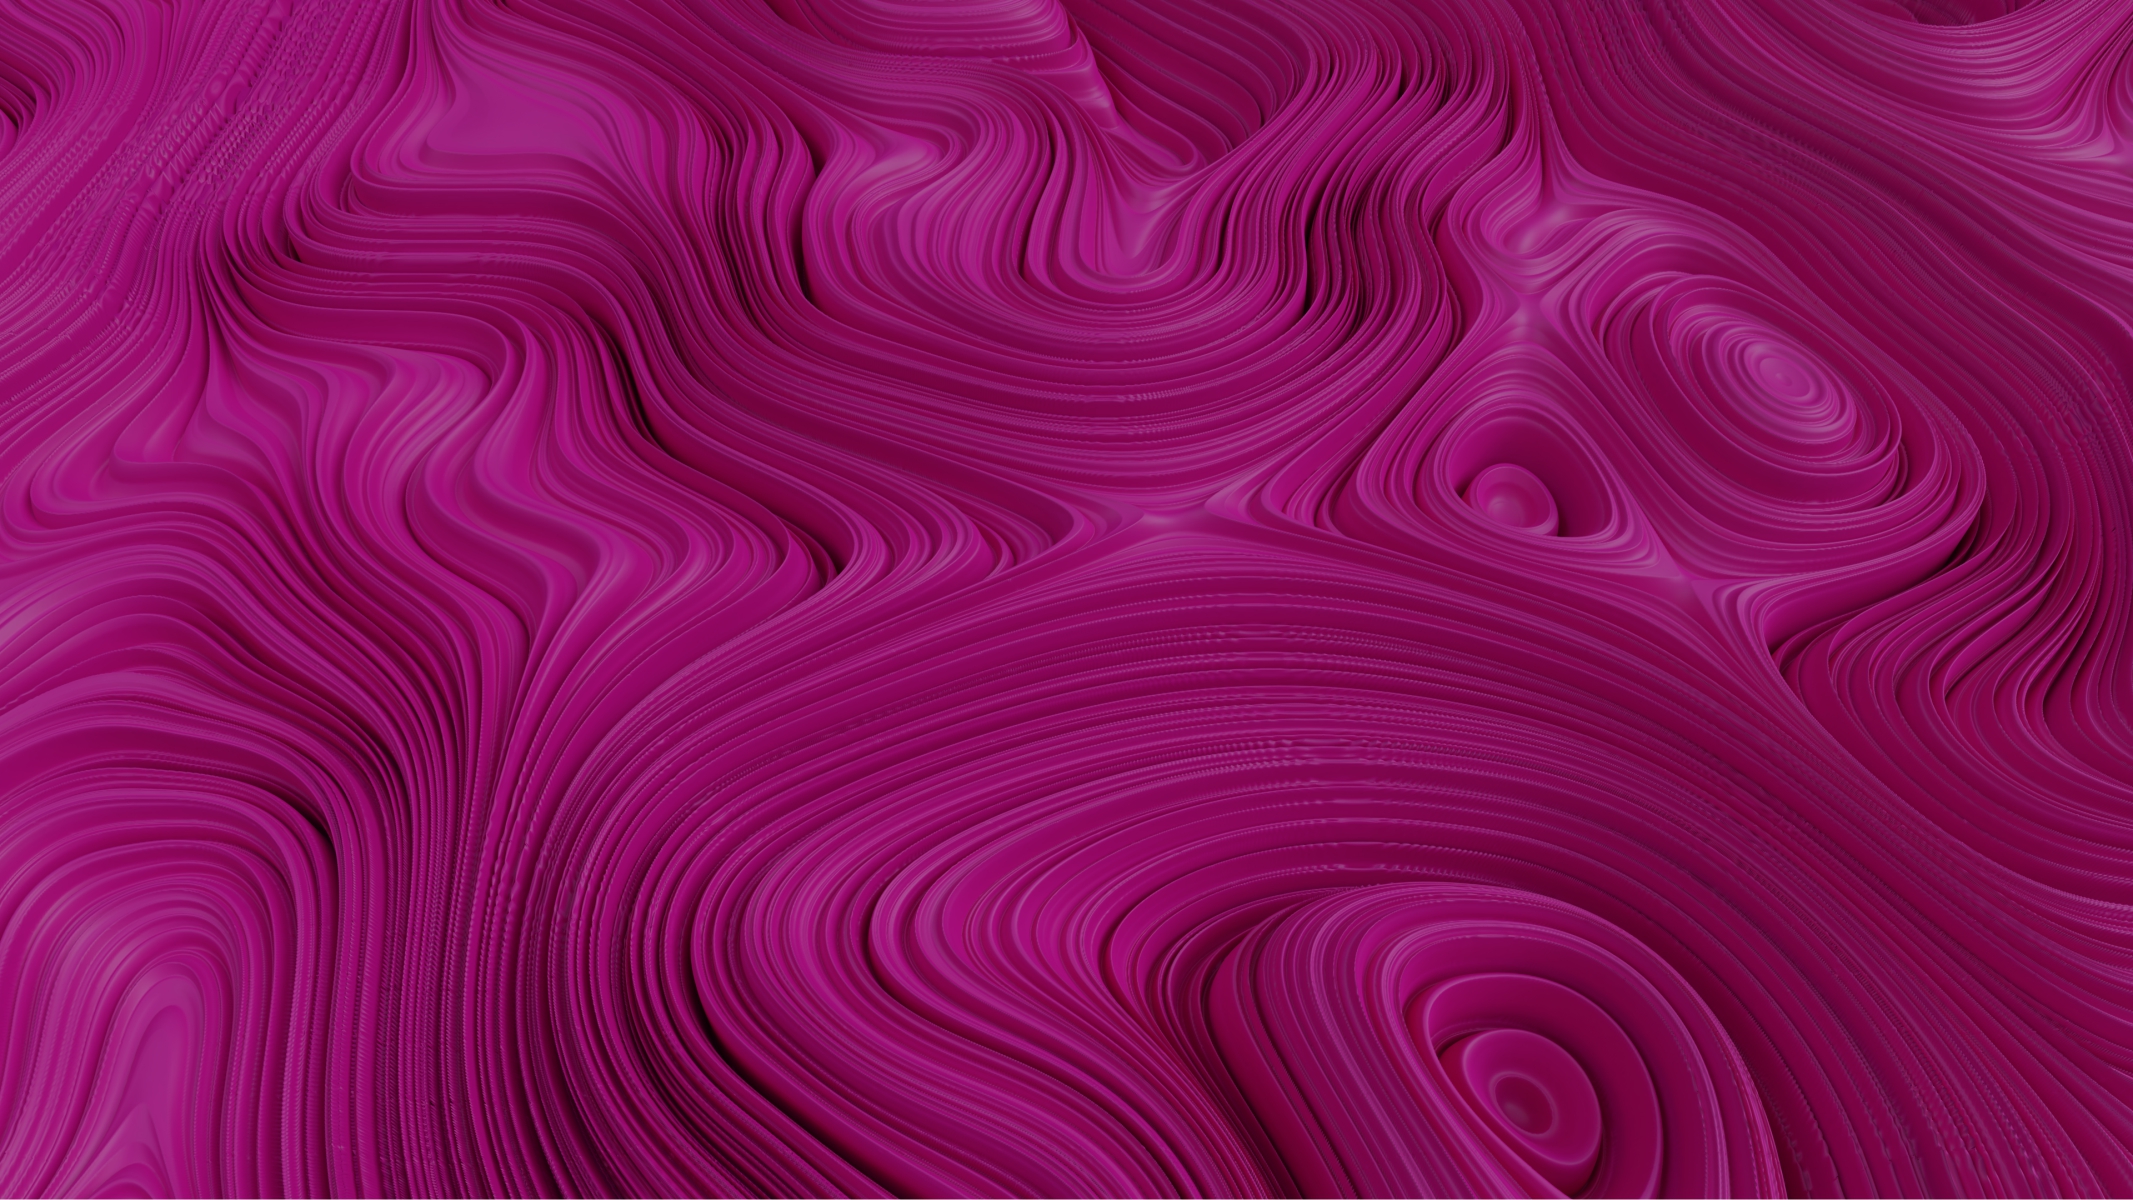 3D Background Pink Rendered Free 4K Creative Download From Coreldrawdesign